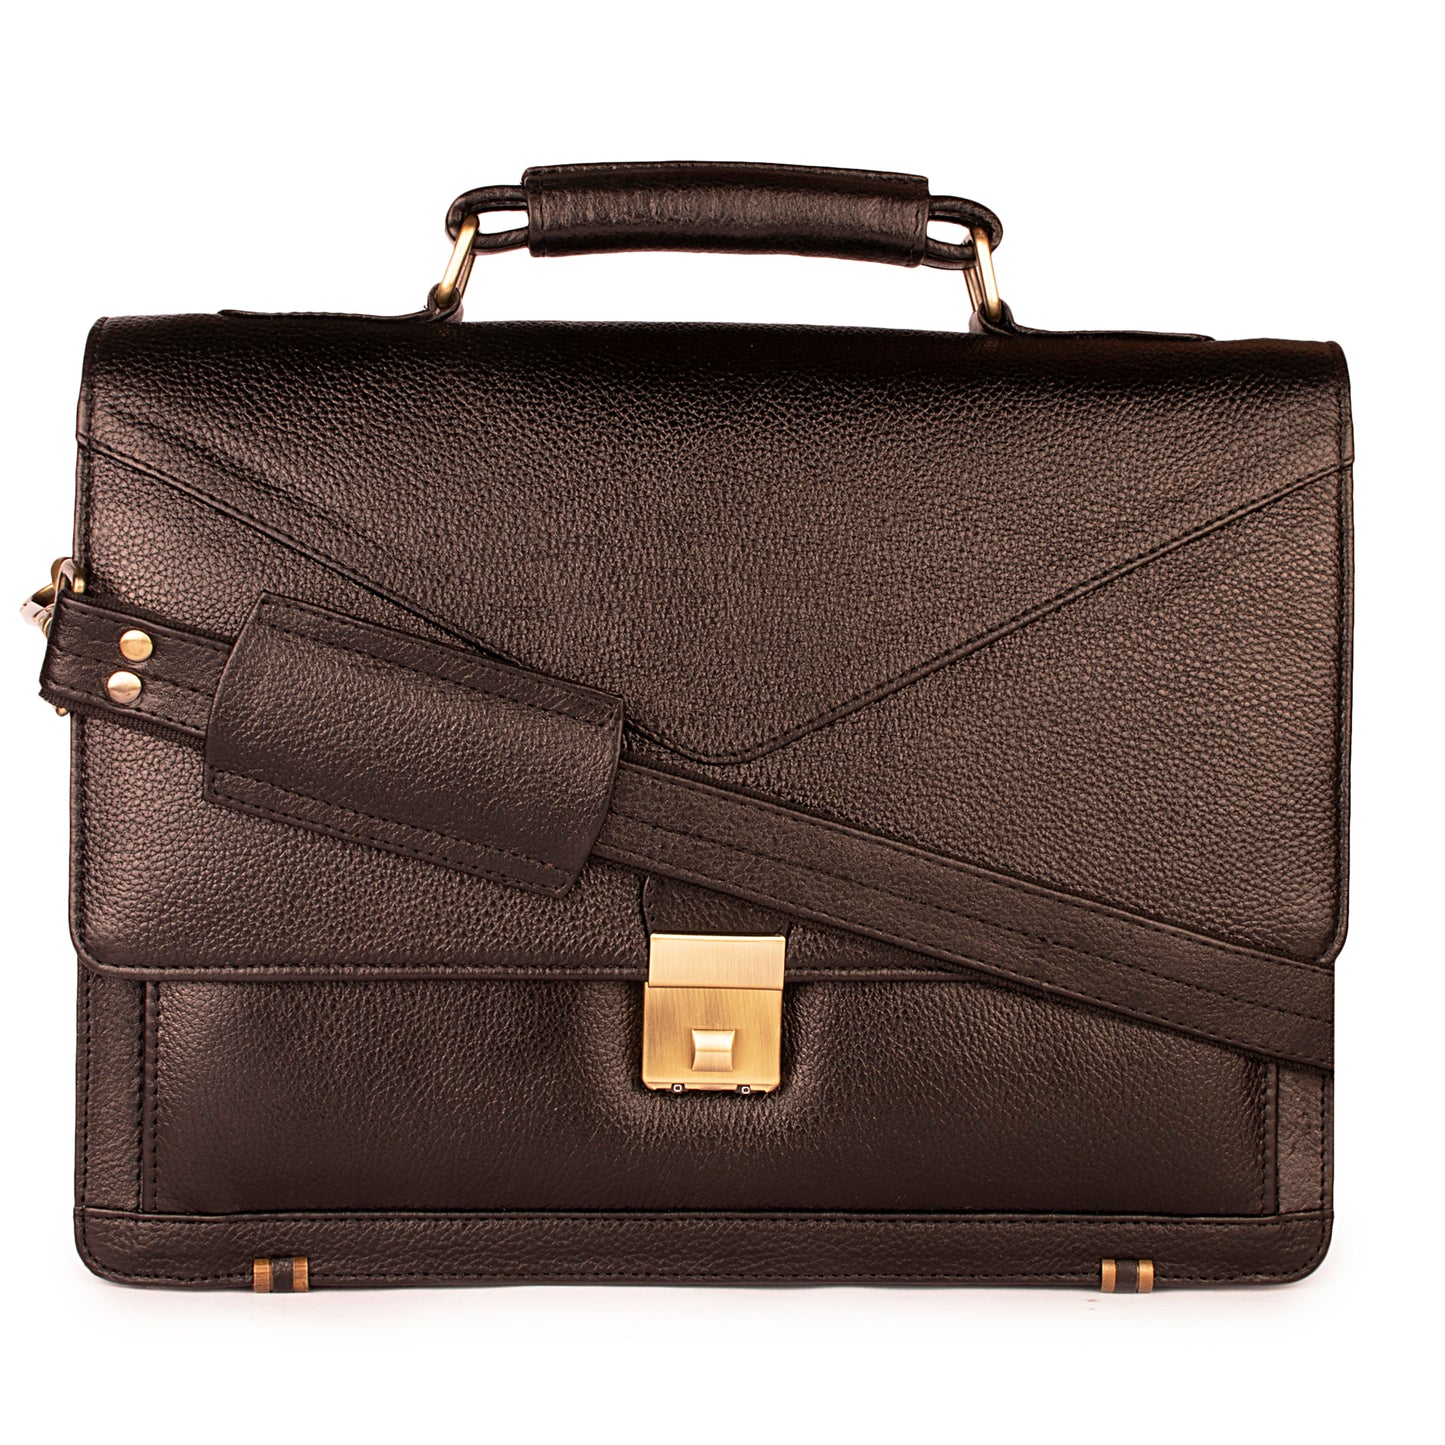 The Classic Briefcase in Black